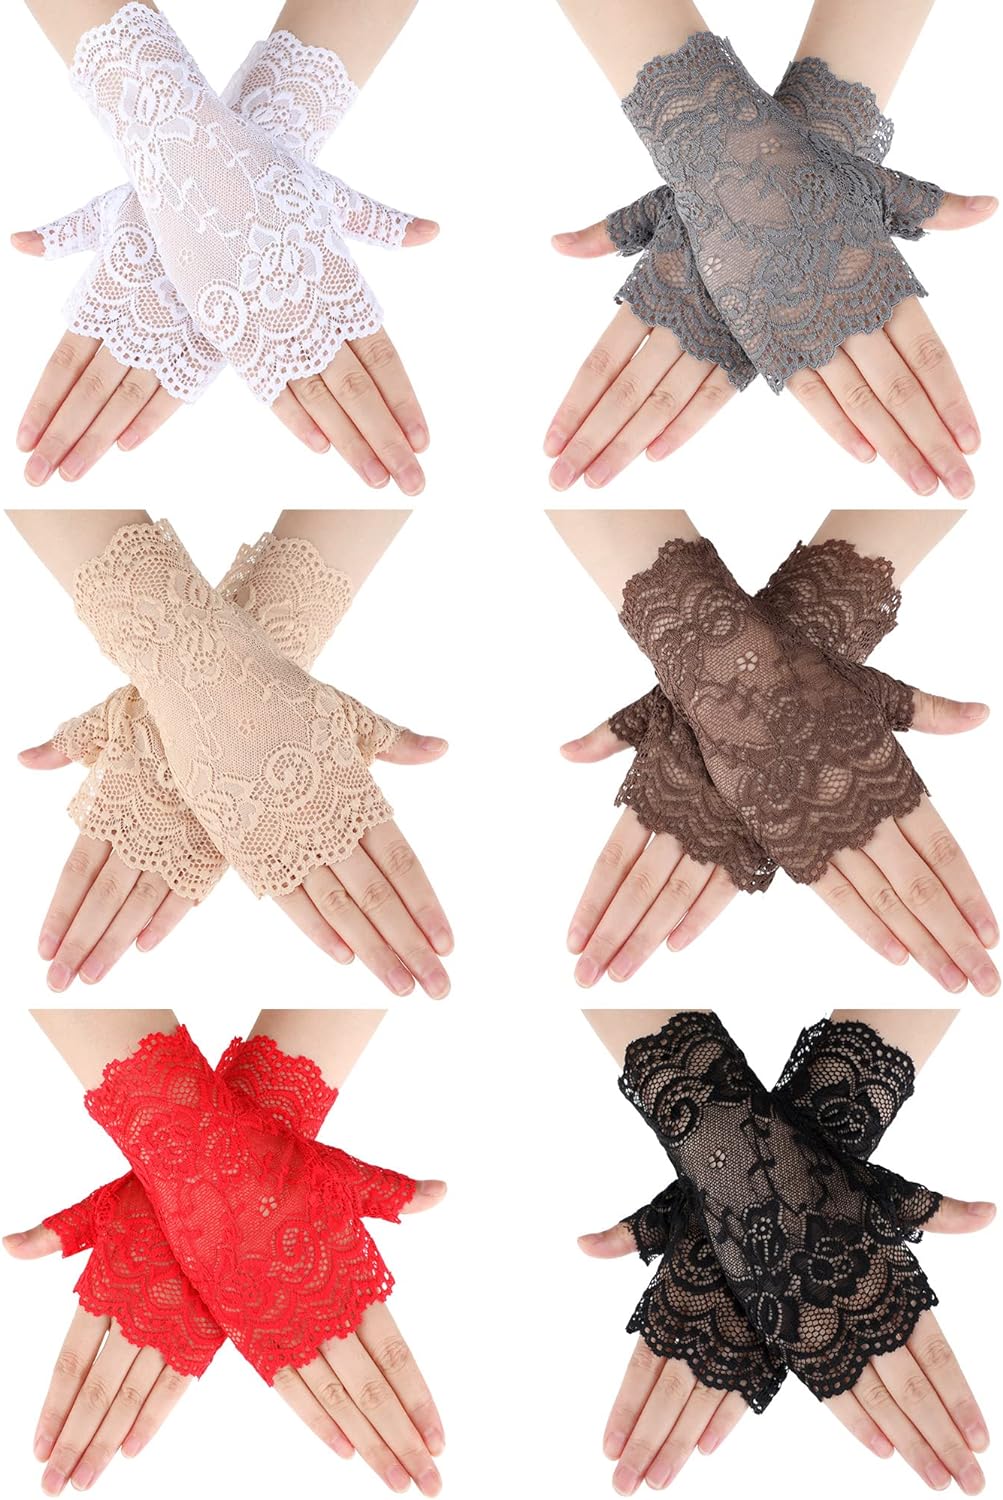 6 Pairs Women' Lace Gloves Fingerless Floral Gloves Short Fingerless Gloves for Bridal Wedding Opera Tea Party